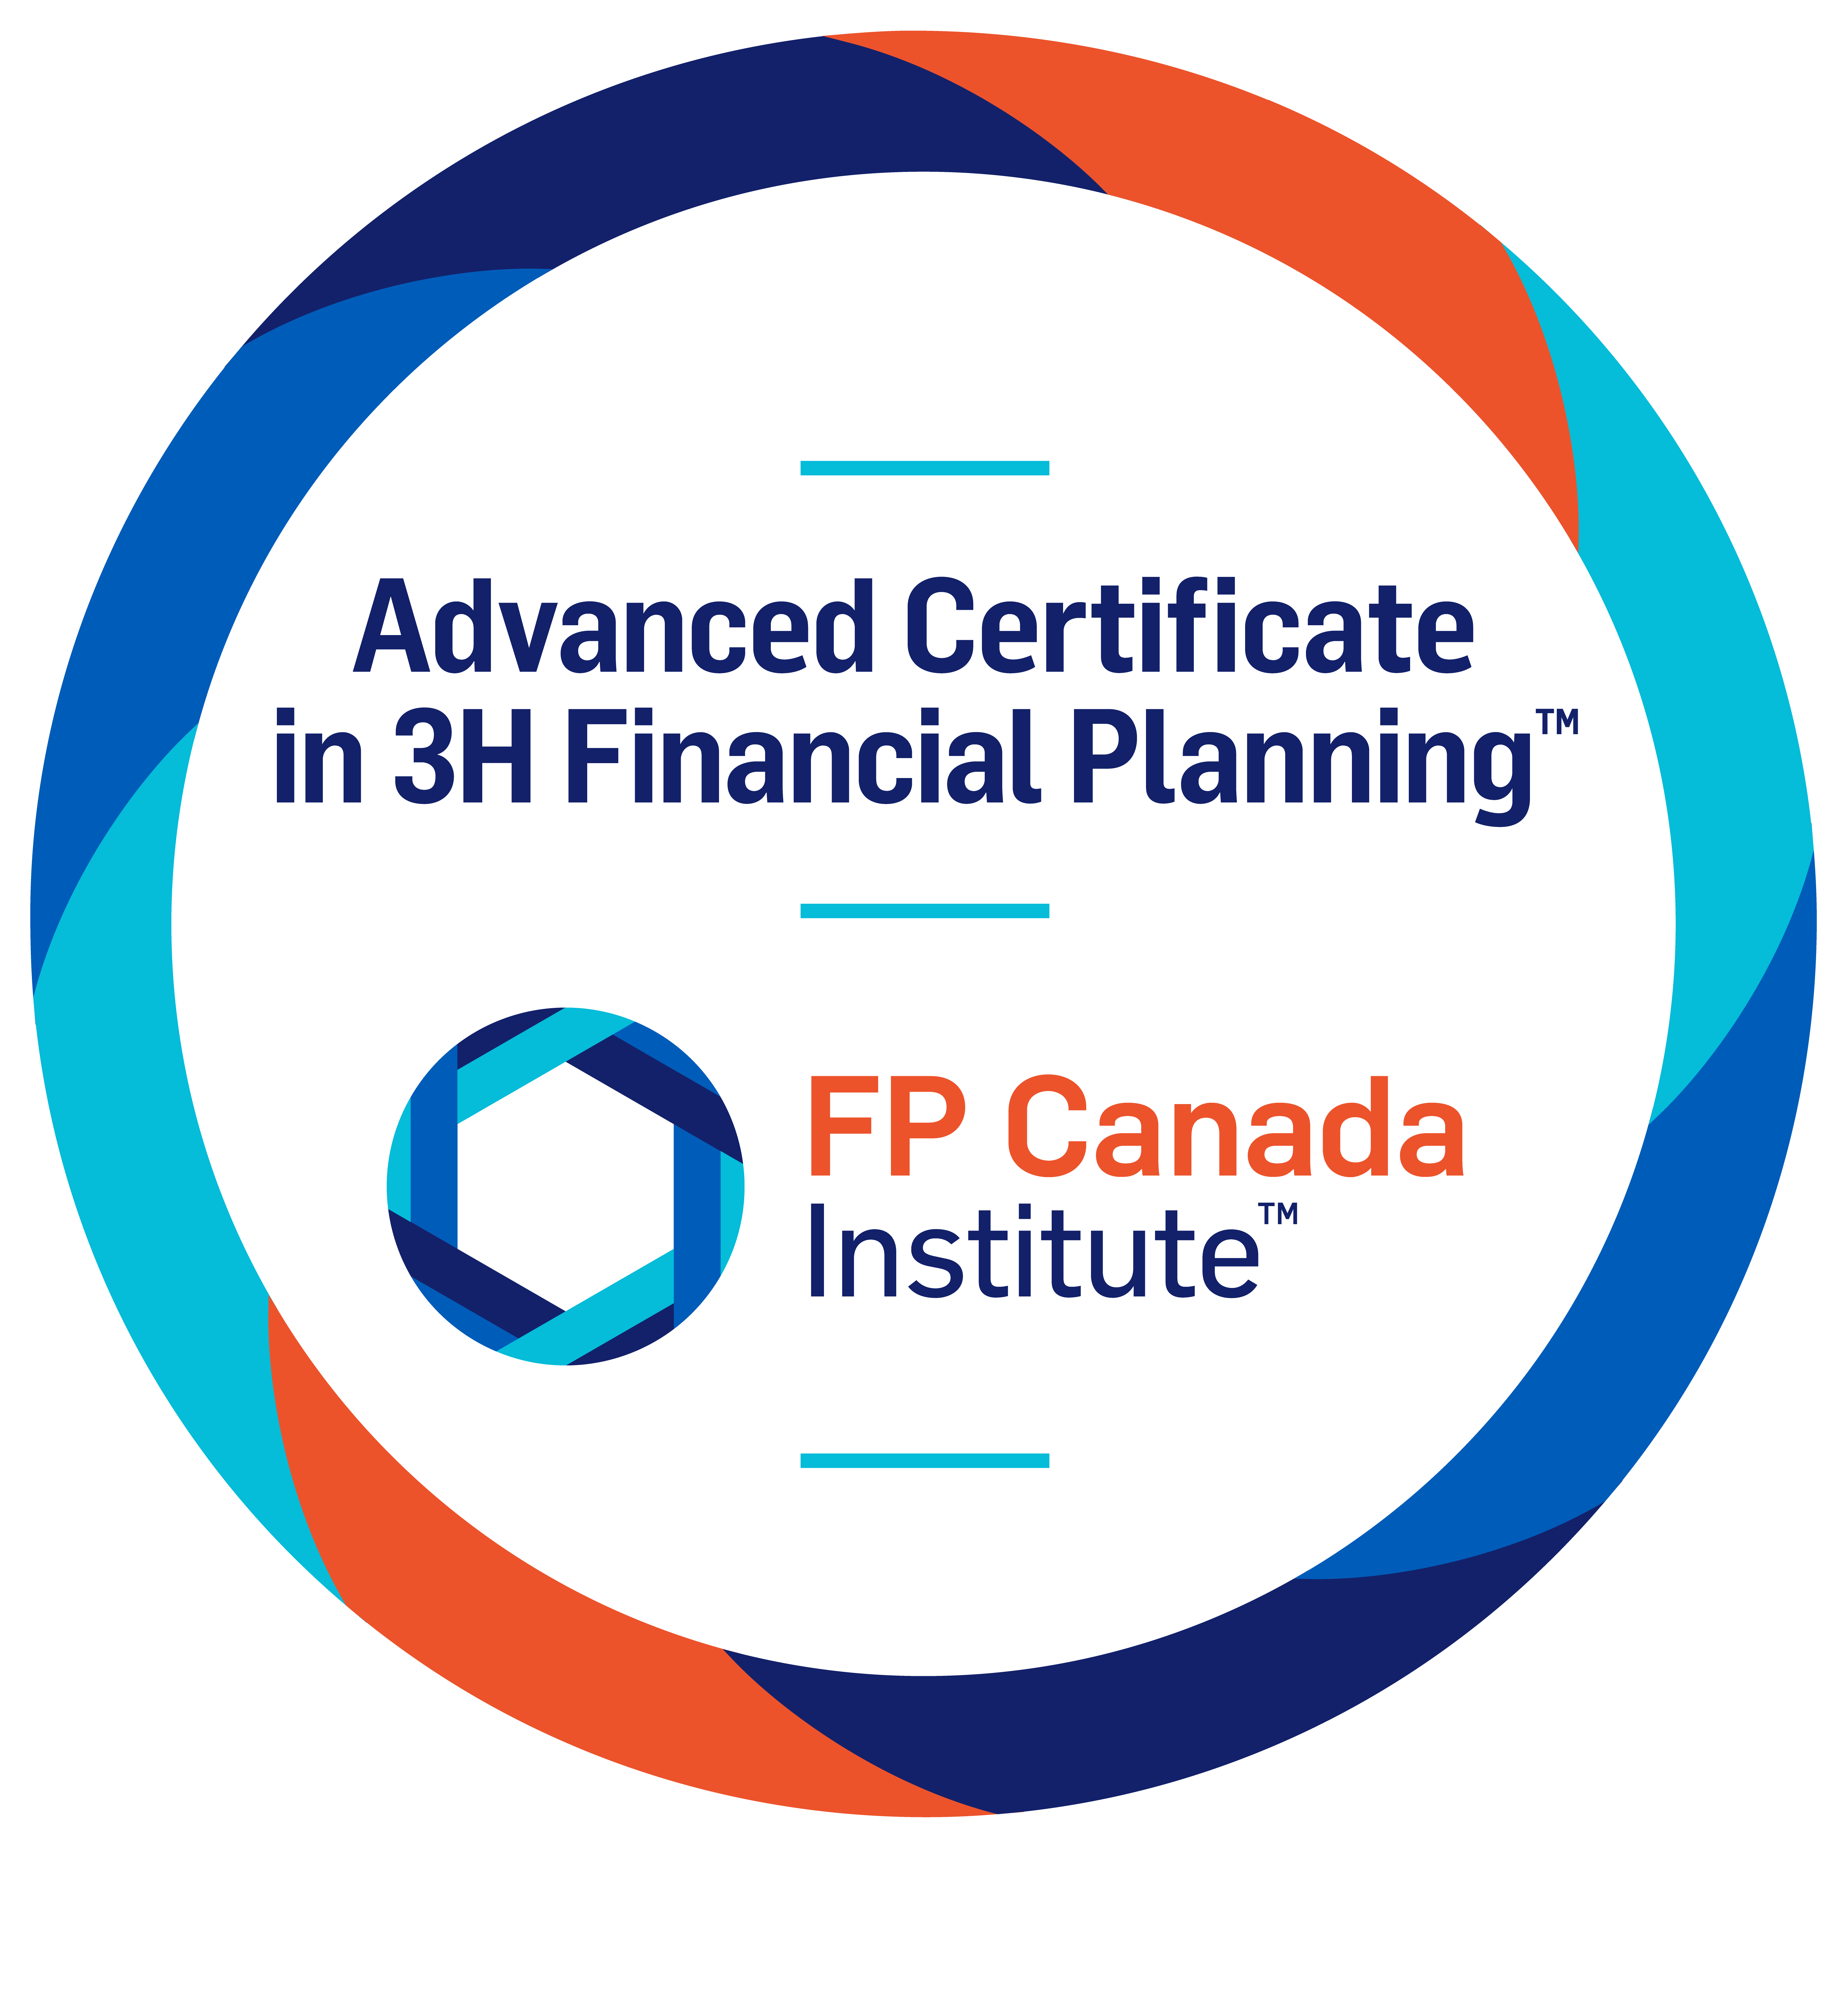 Advanced Certificate in 3H Financial Planning digital badge